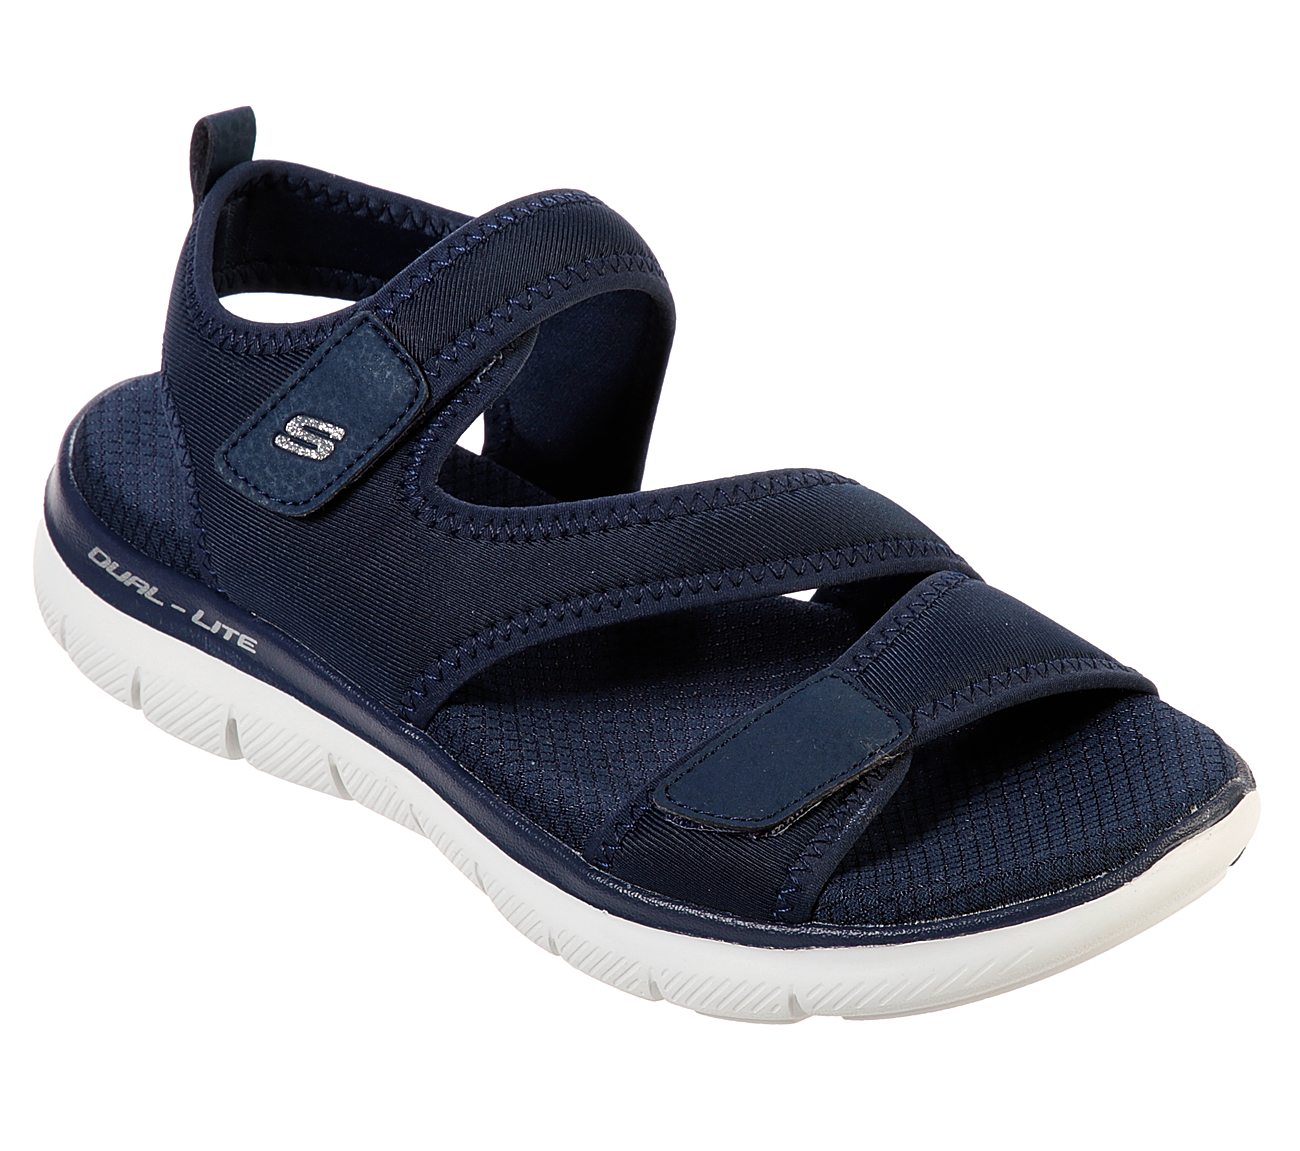 skechers summer sandals promo code for 